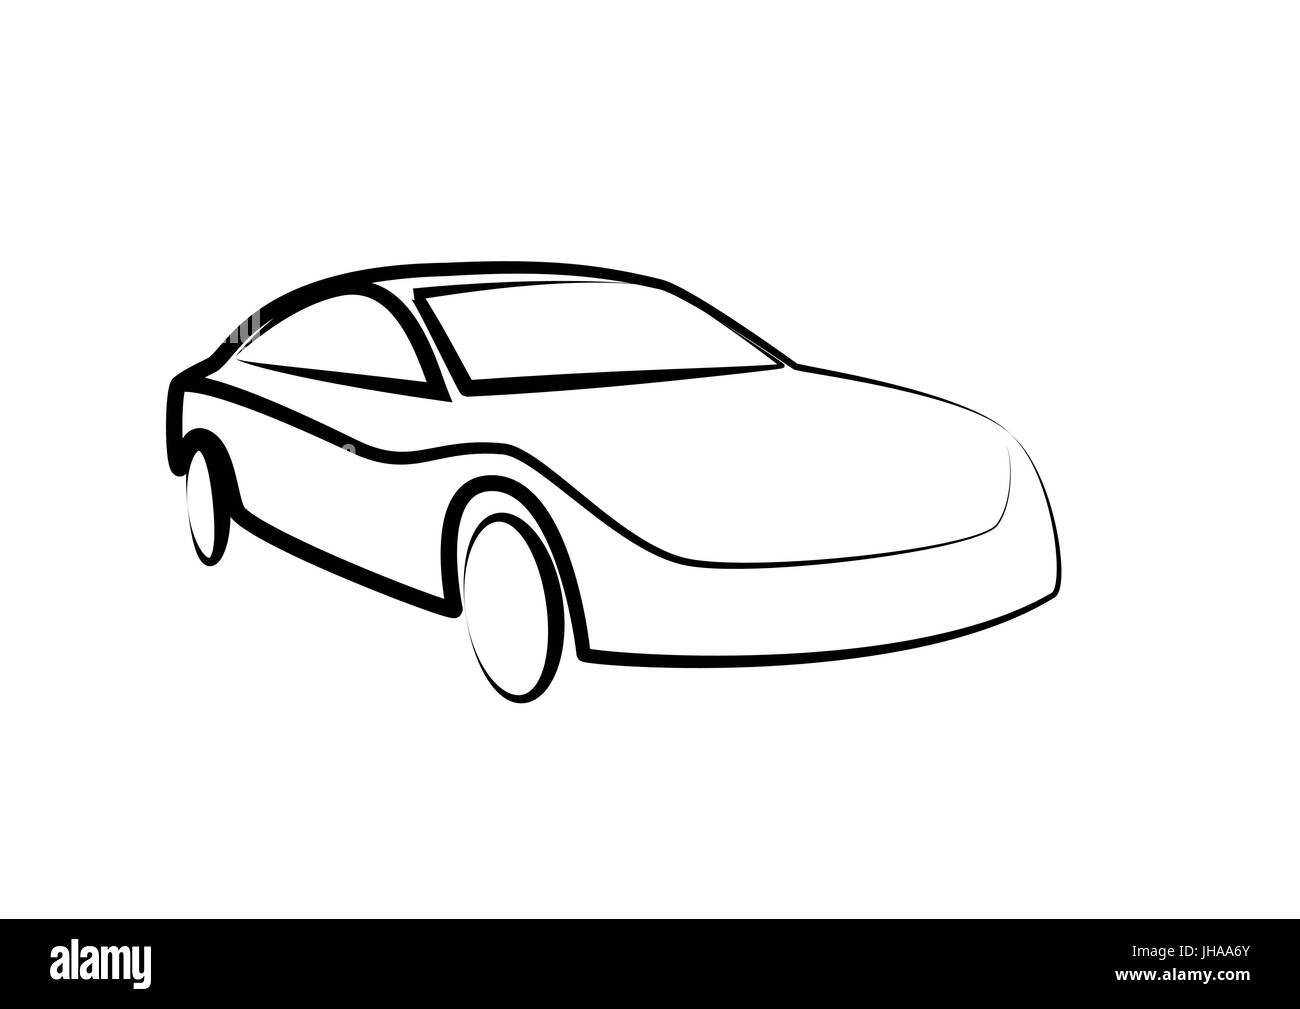 sports car outlines. modern car illustration. car vector image Stock Photo